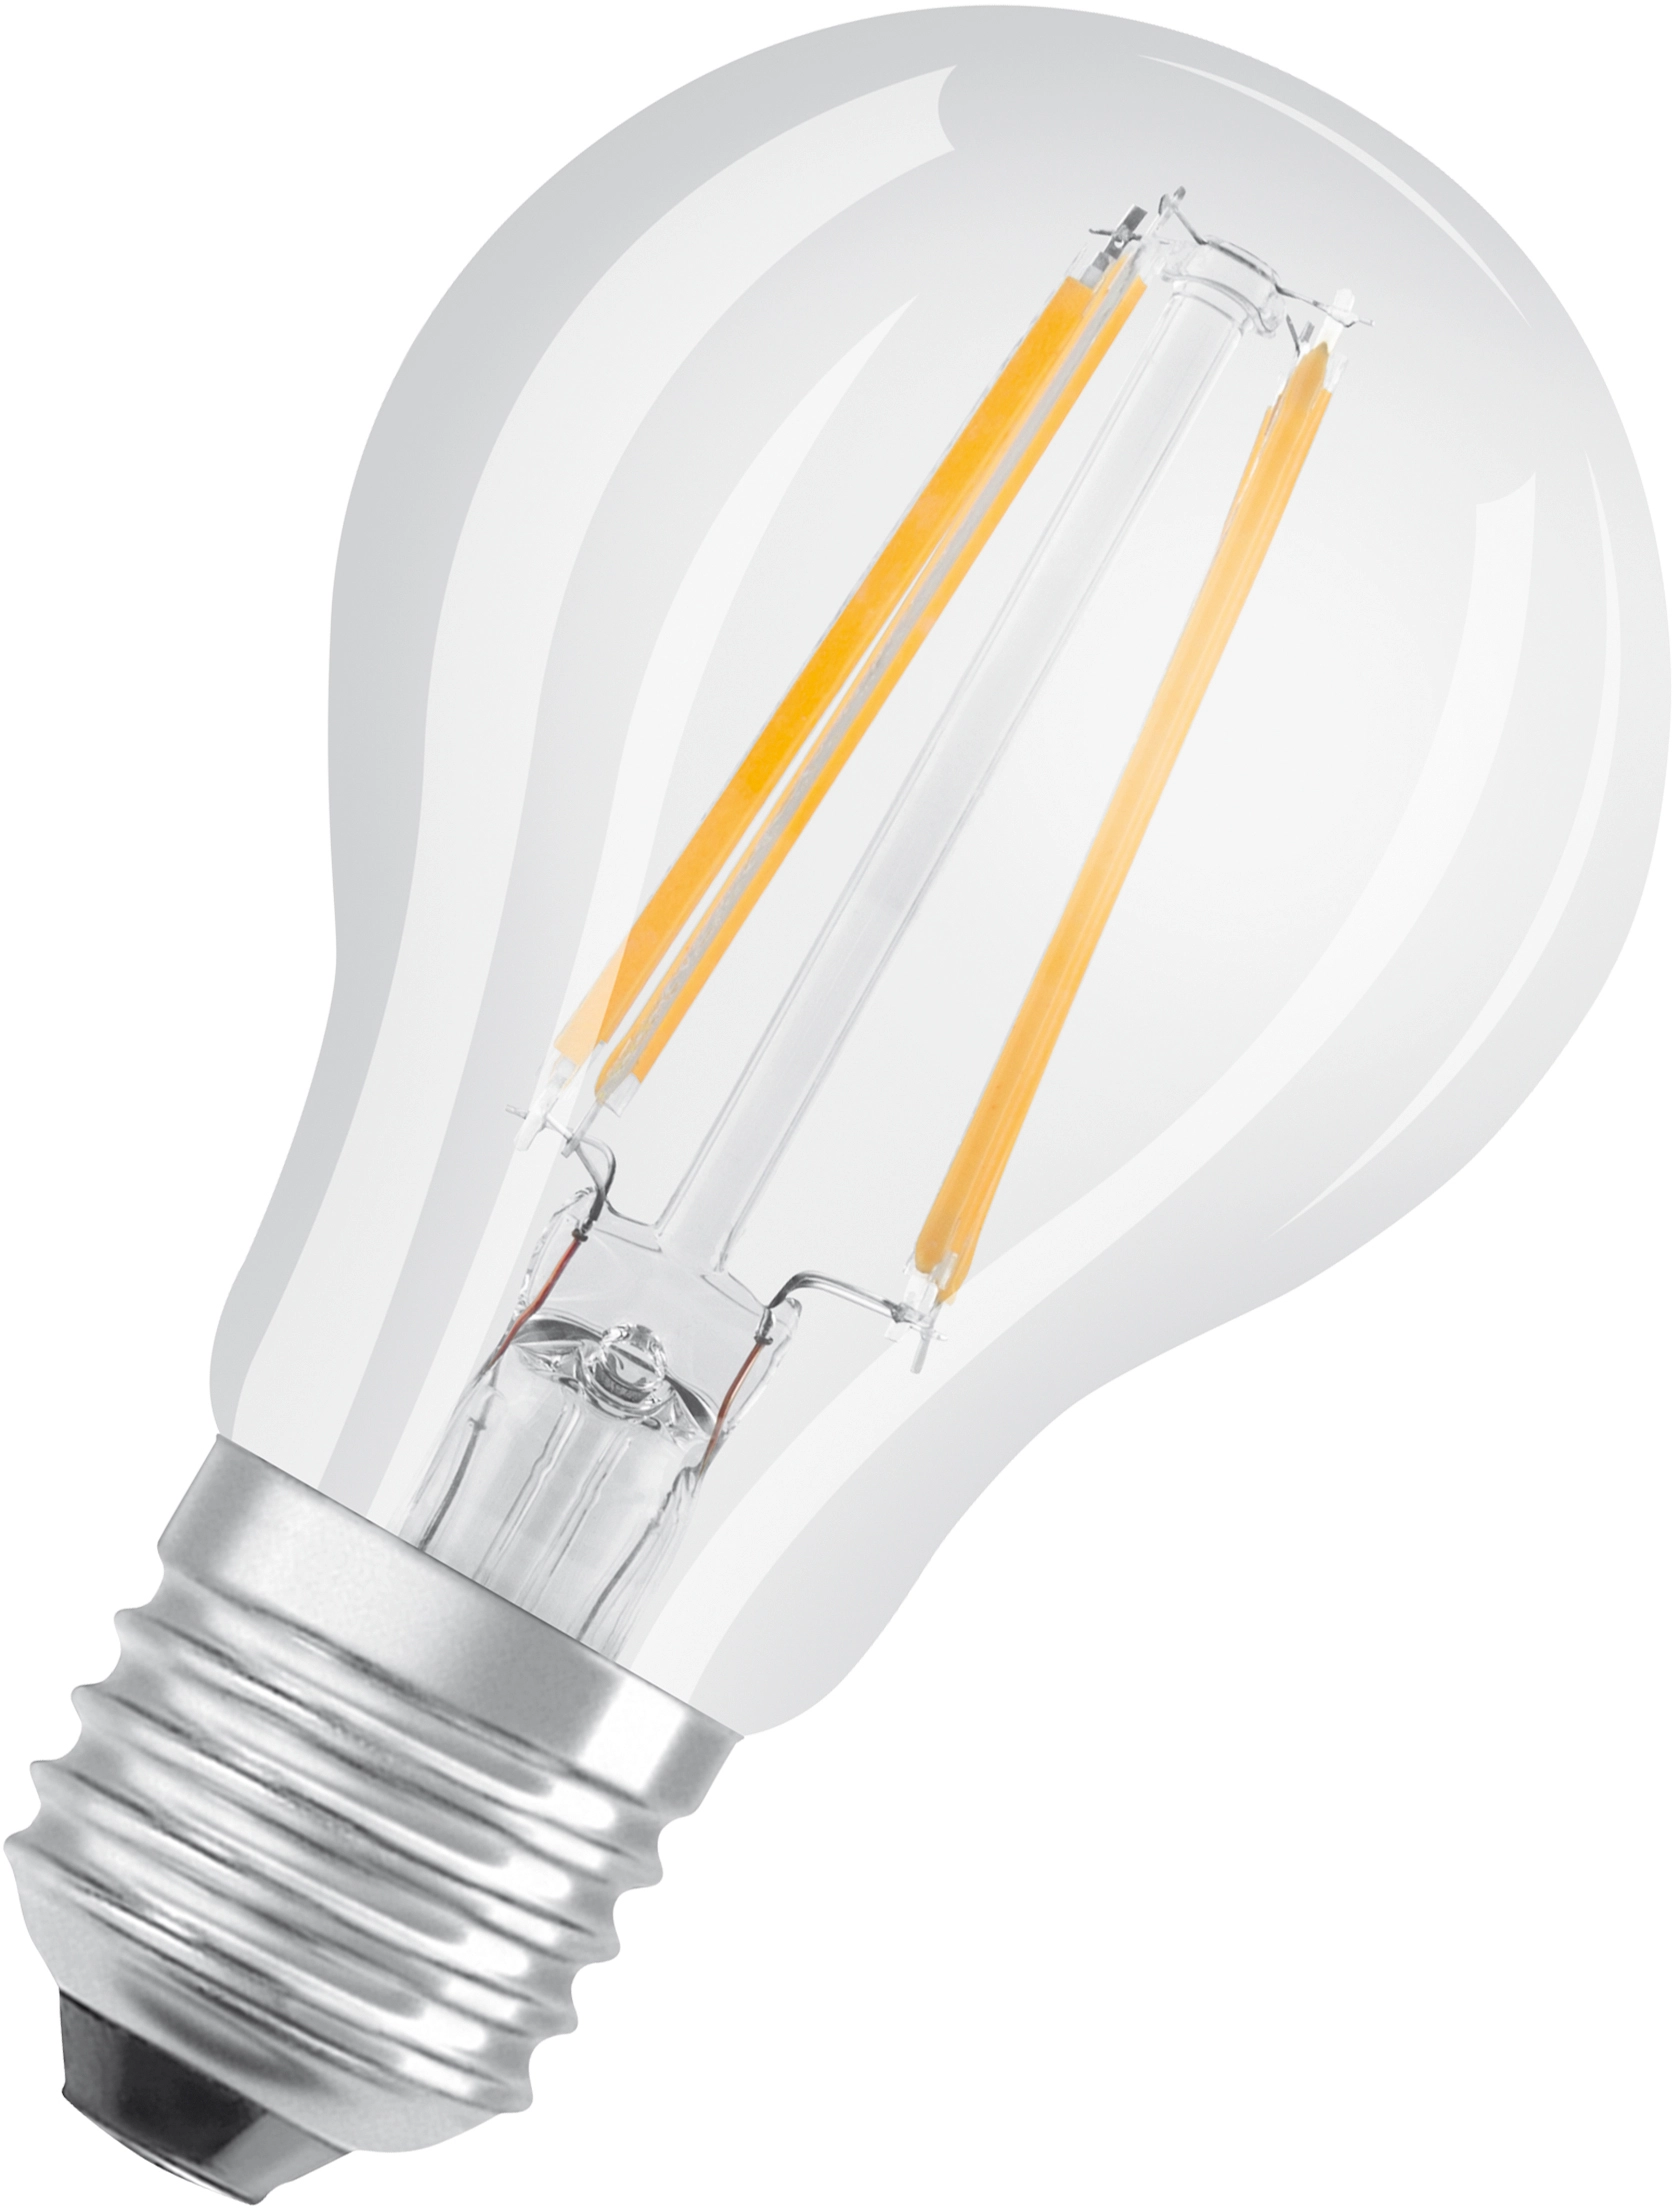 Bellalux Lampadina LED classica a filamento E27 Bianco caldo 60 W / 806 lm